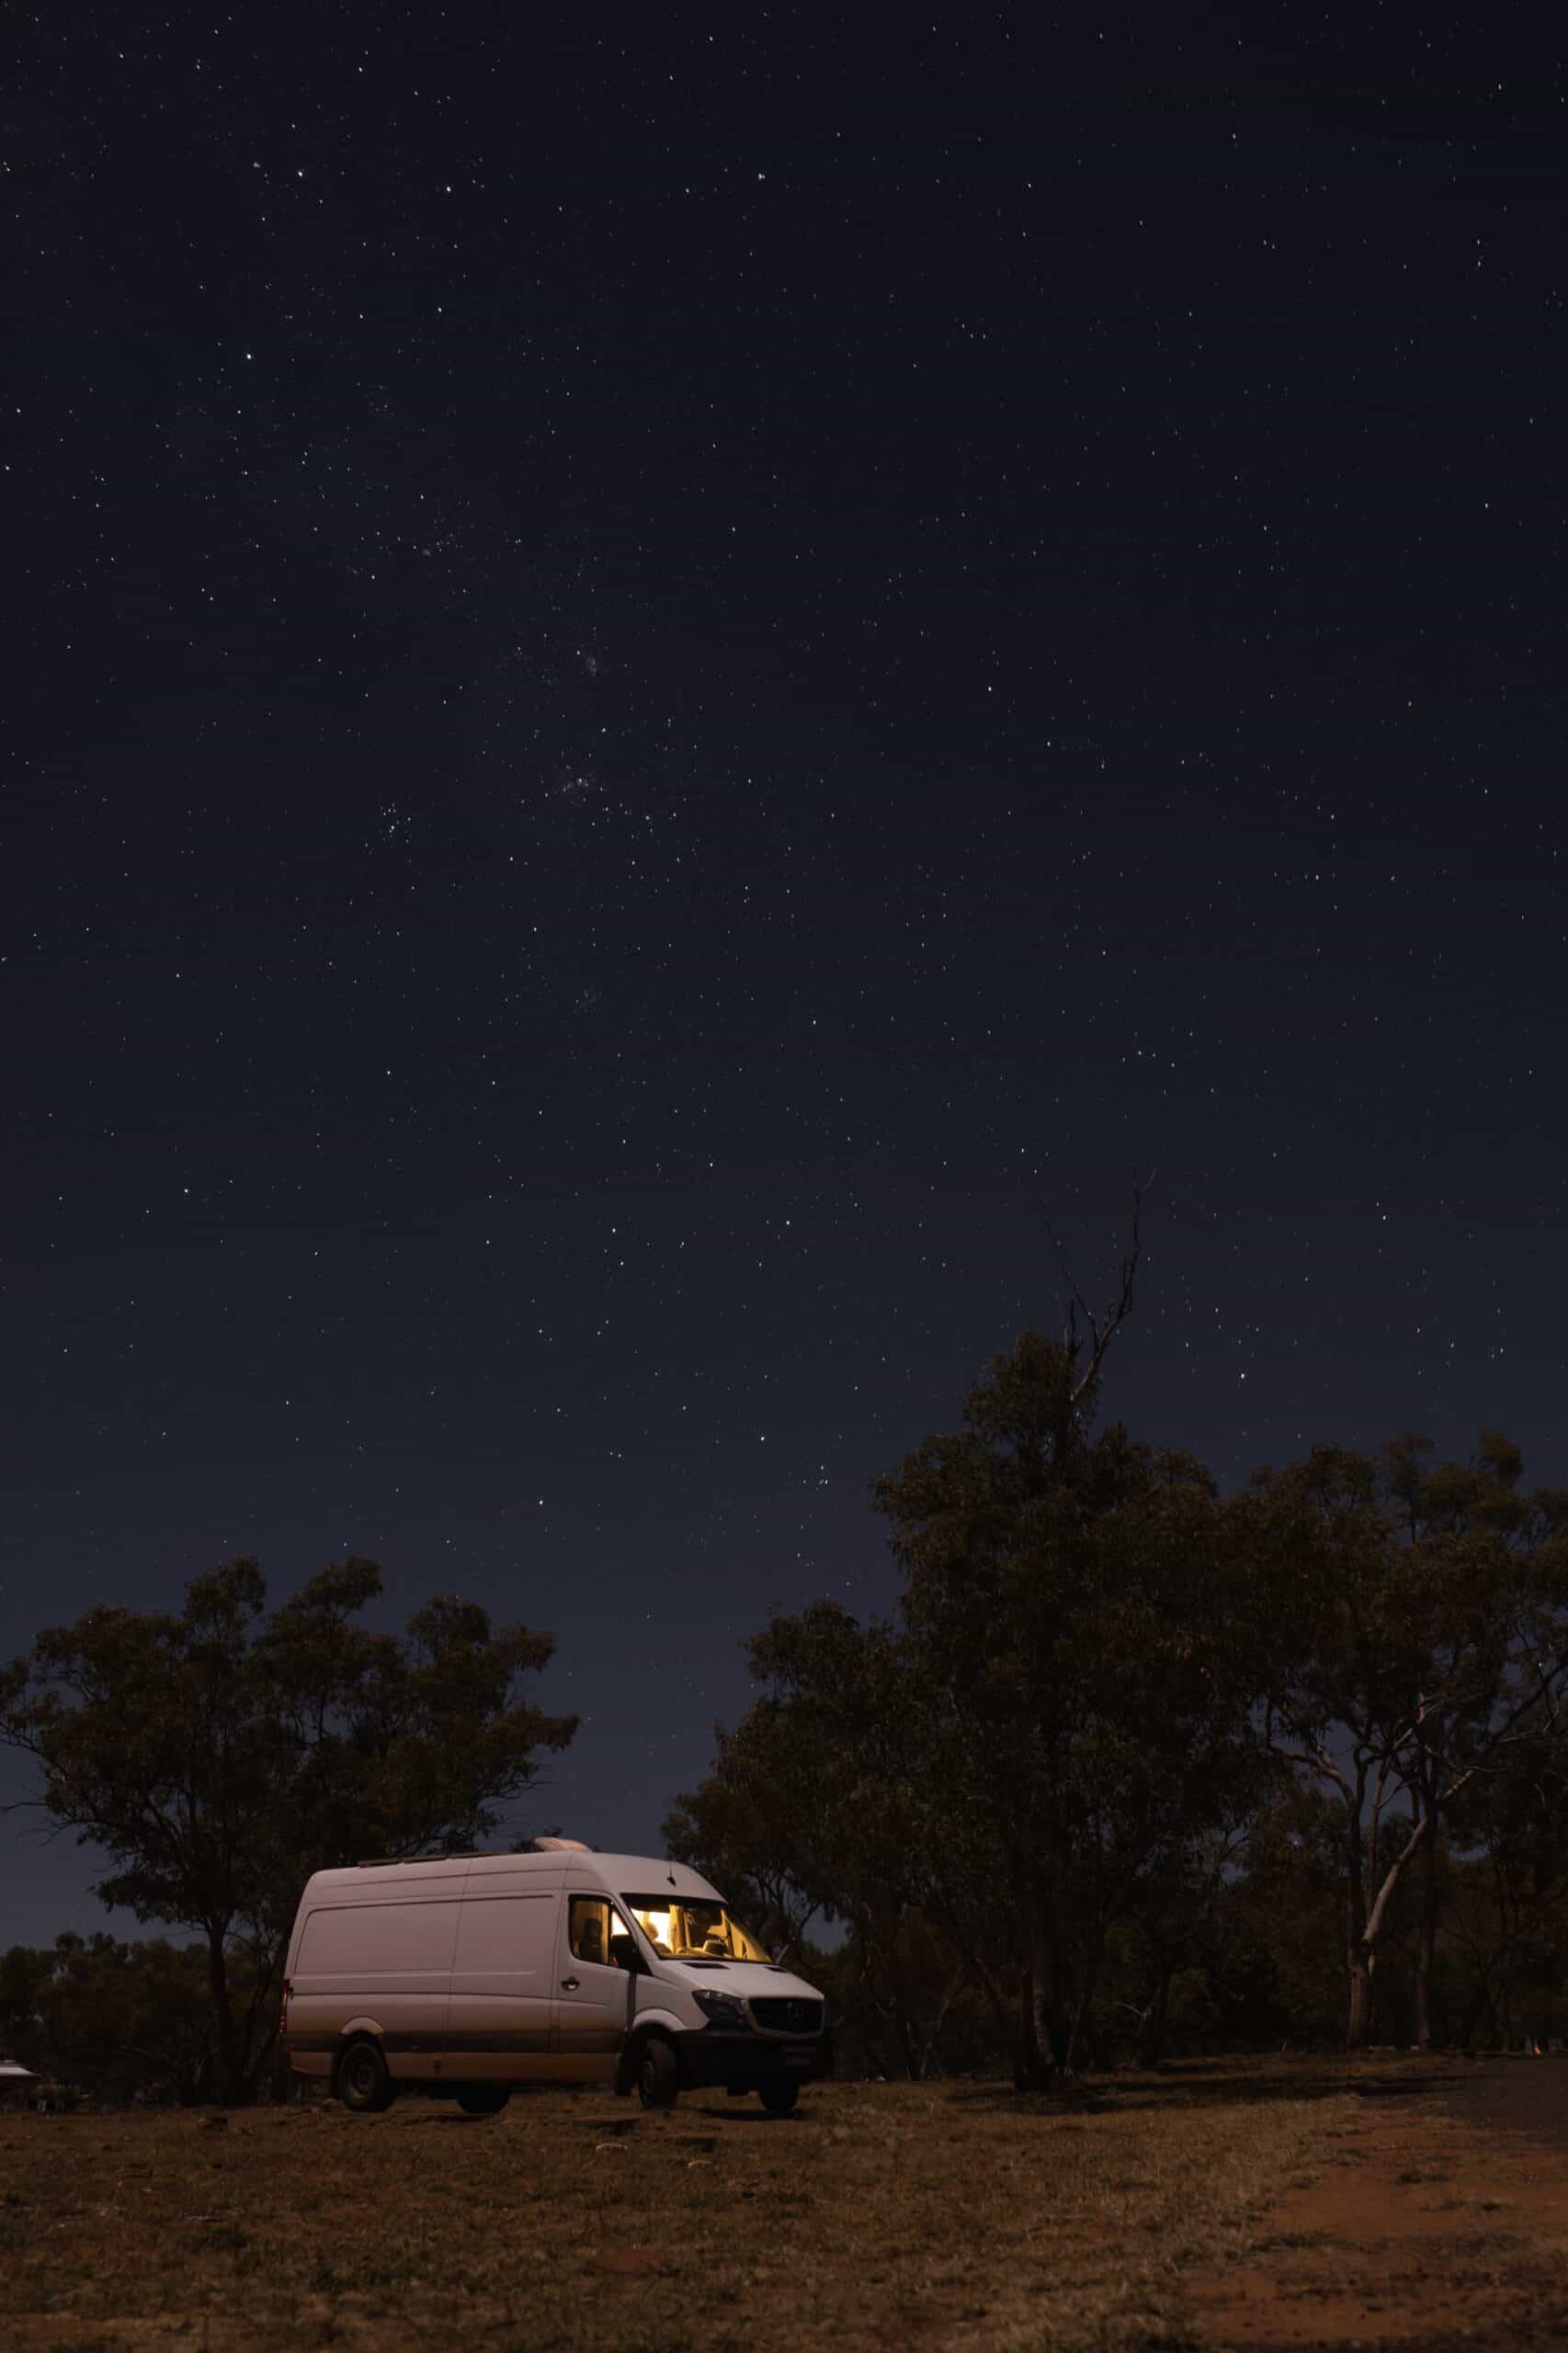 Our campervan parked under the starts